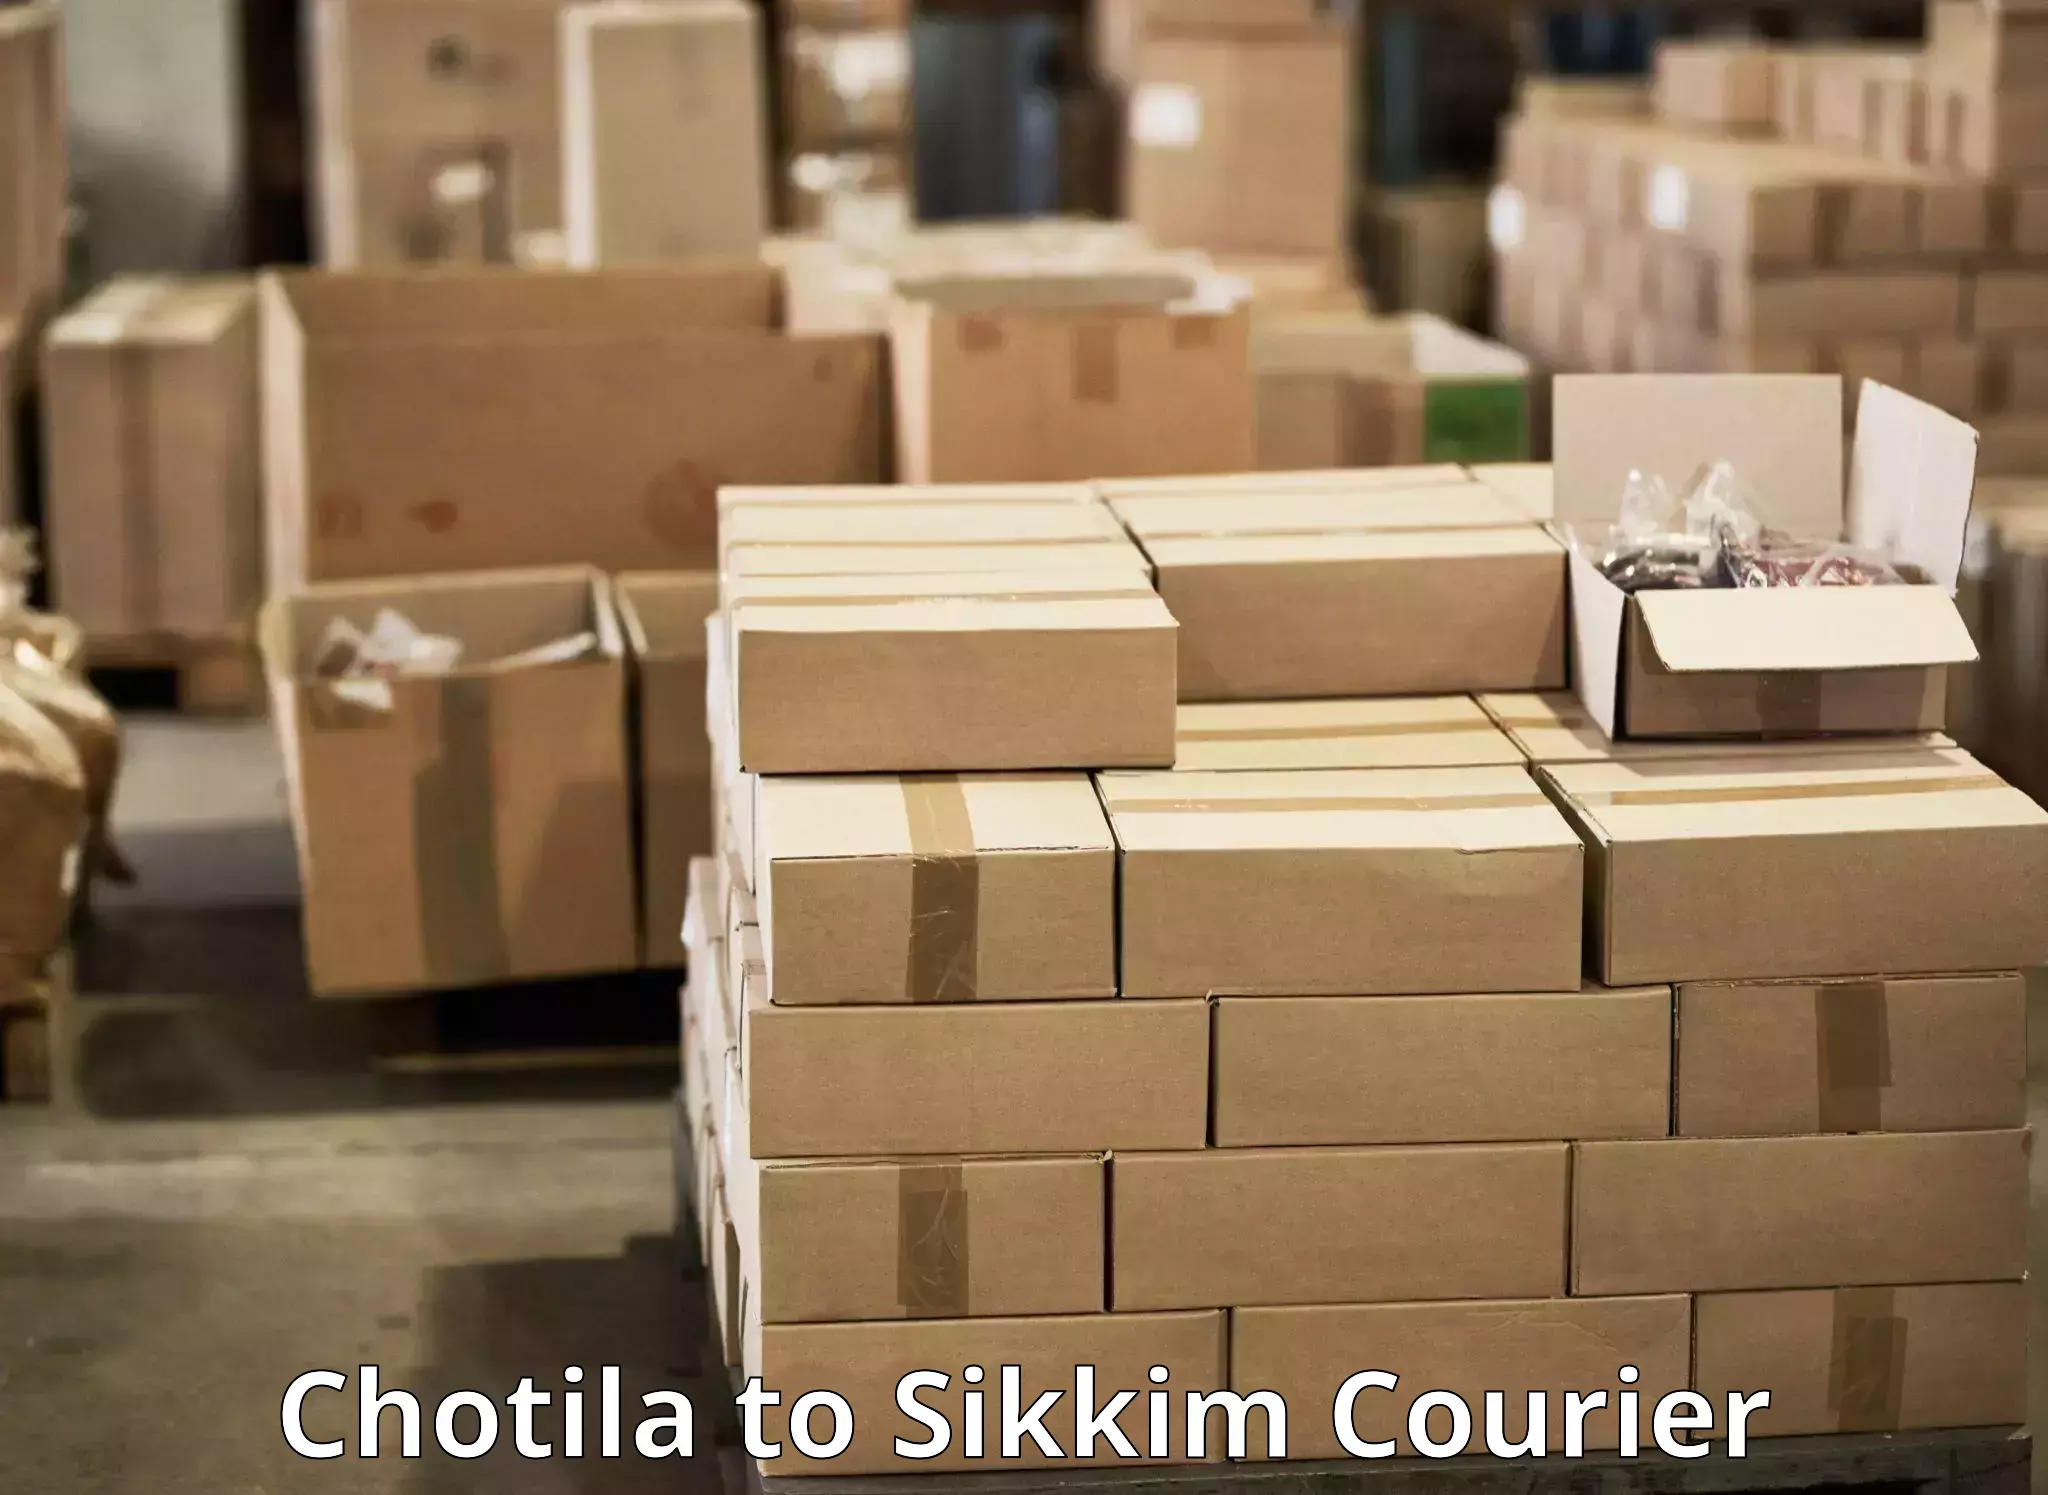 Urgent courier needs Chotila to Pelling